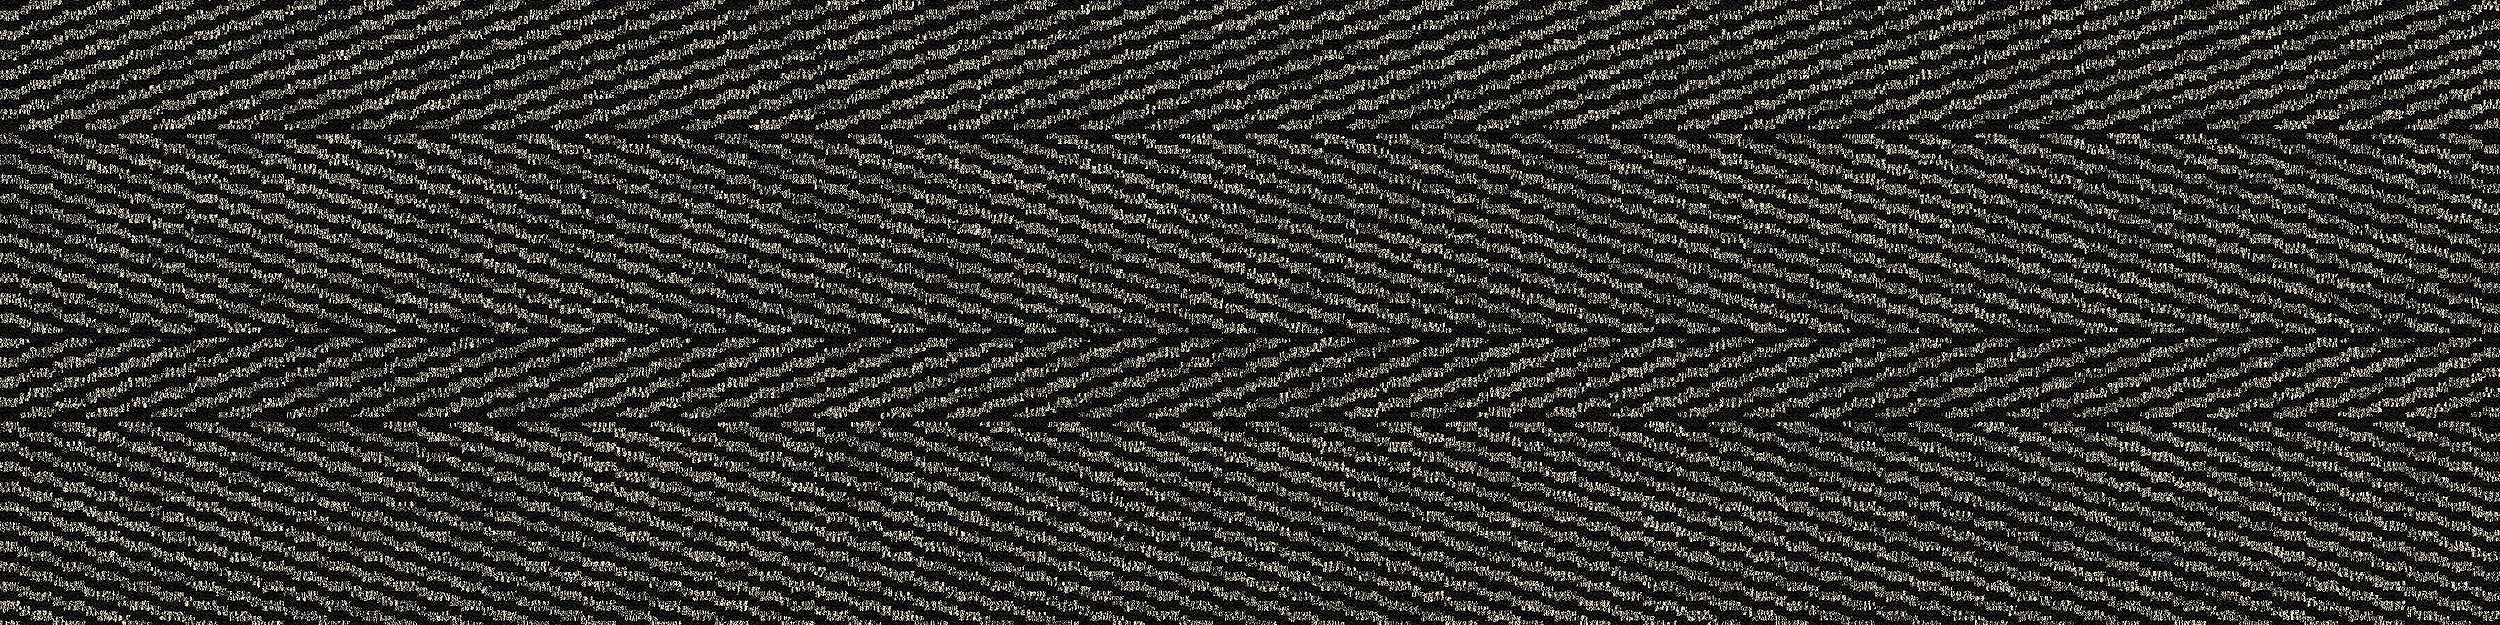 Stitch In Time Carpet Tile In Black Stitch numéro d’image 6